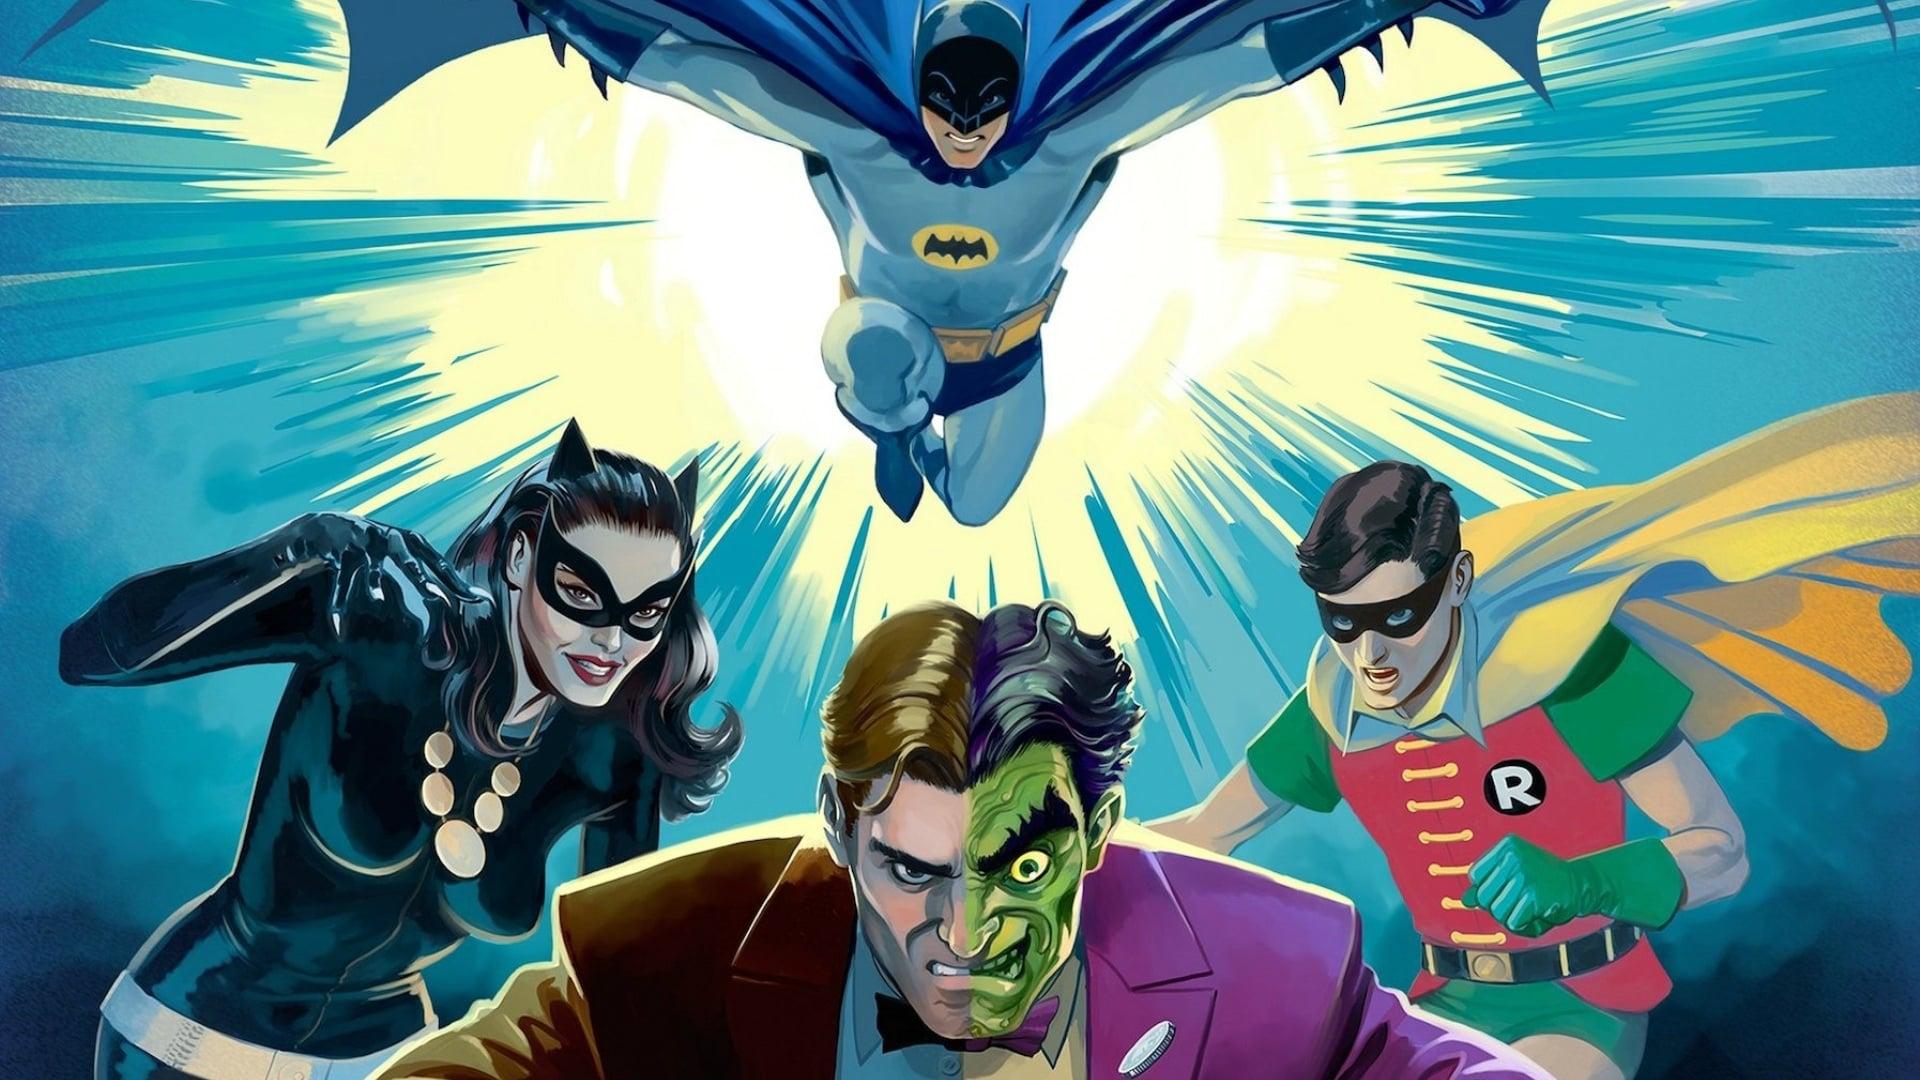 Batman vs. Two-Face backdrop